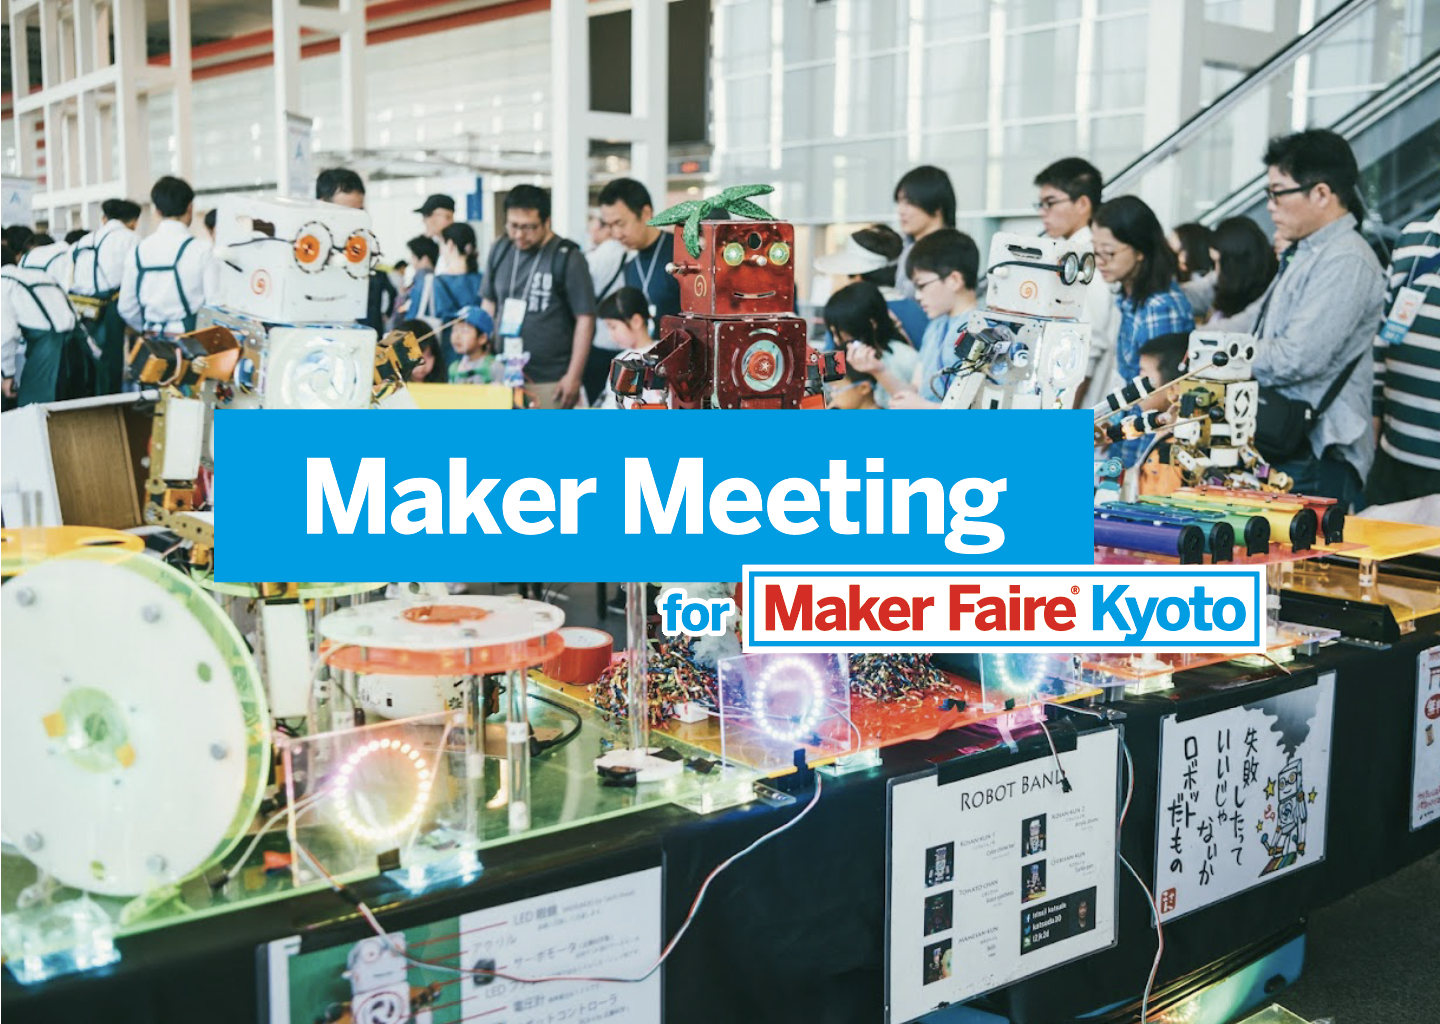 Maker Meeting for Maker Faire Kyoto＋ 子どもワークショップ